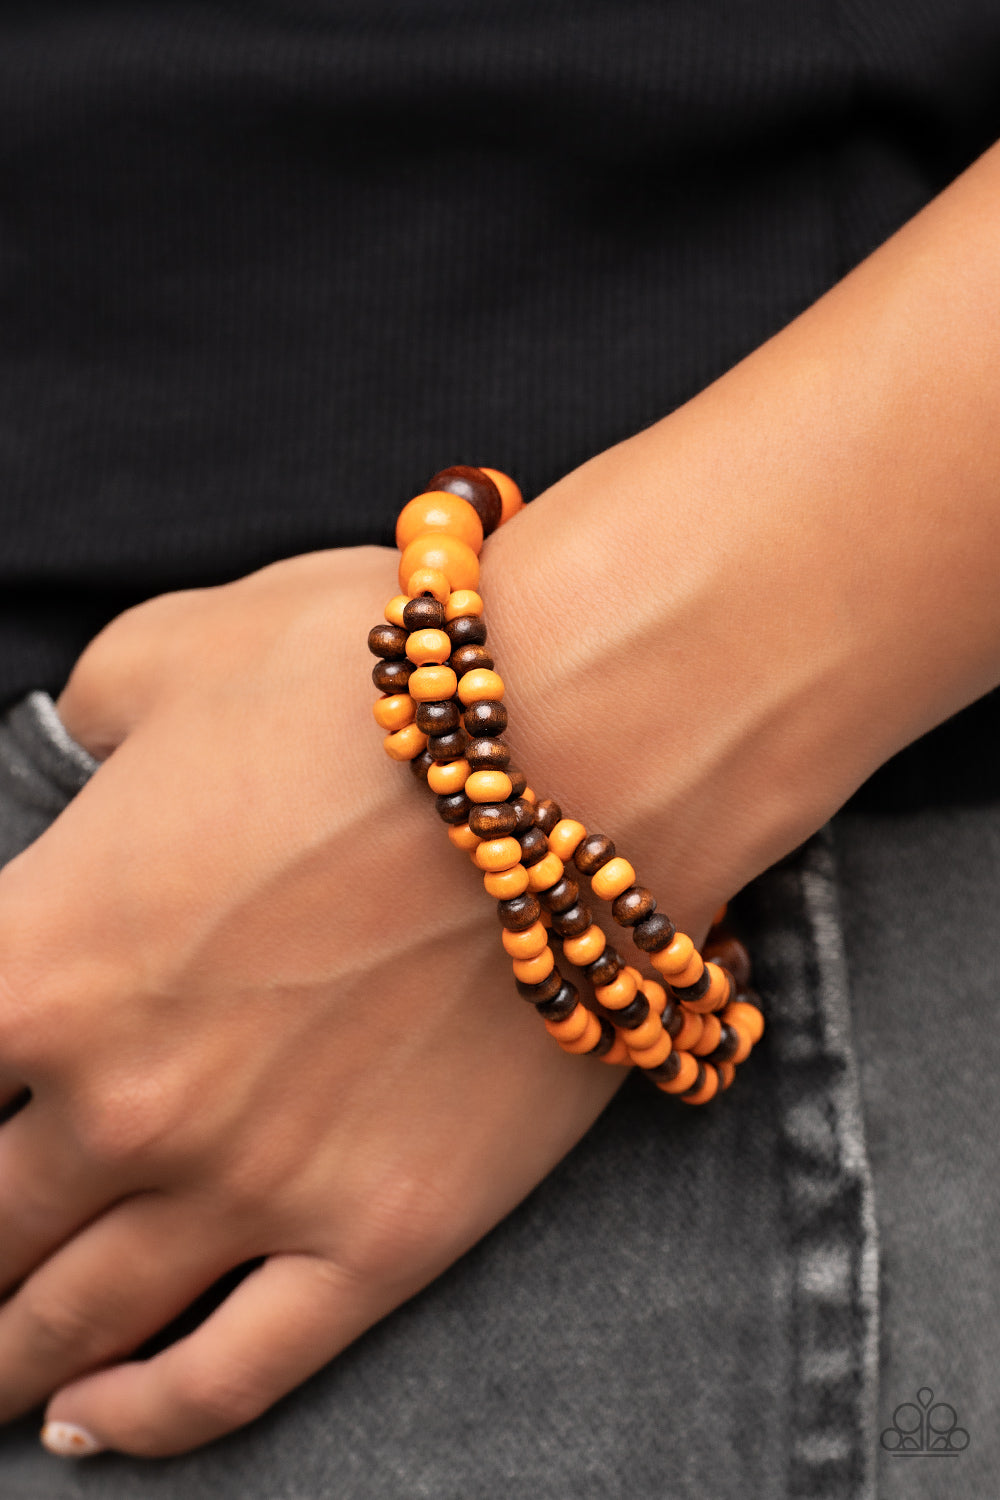 Oceania Oasis - Orange and Brown Bracelet- Paparazzi Accessories